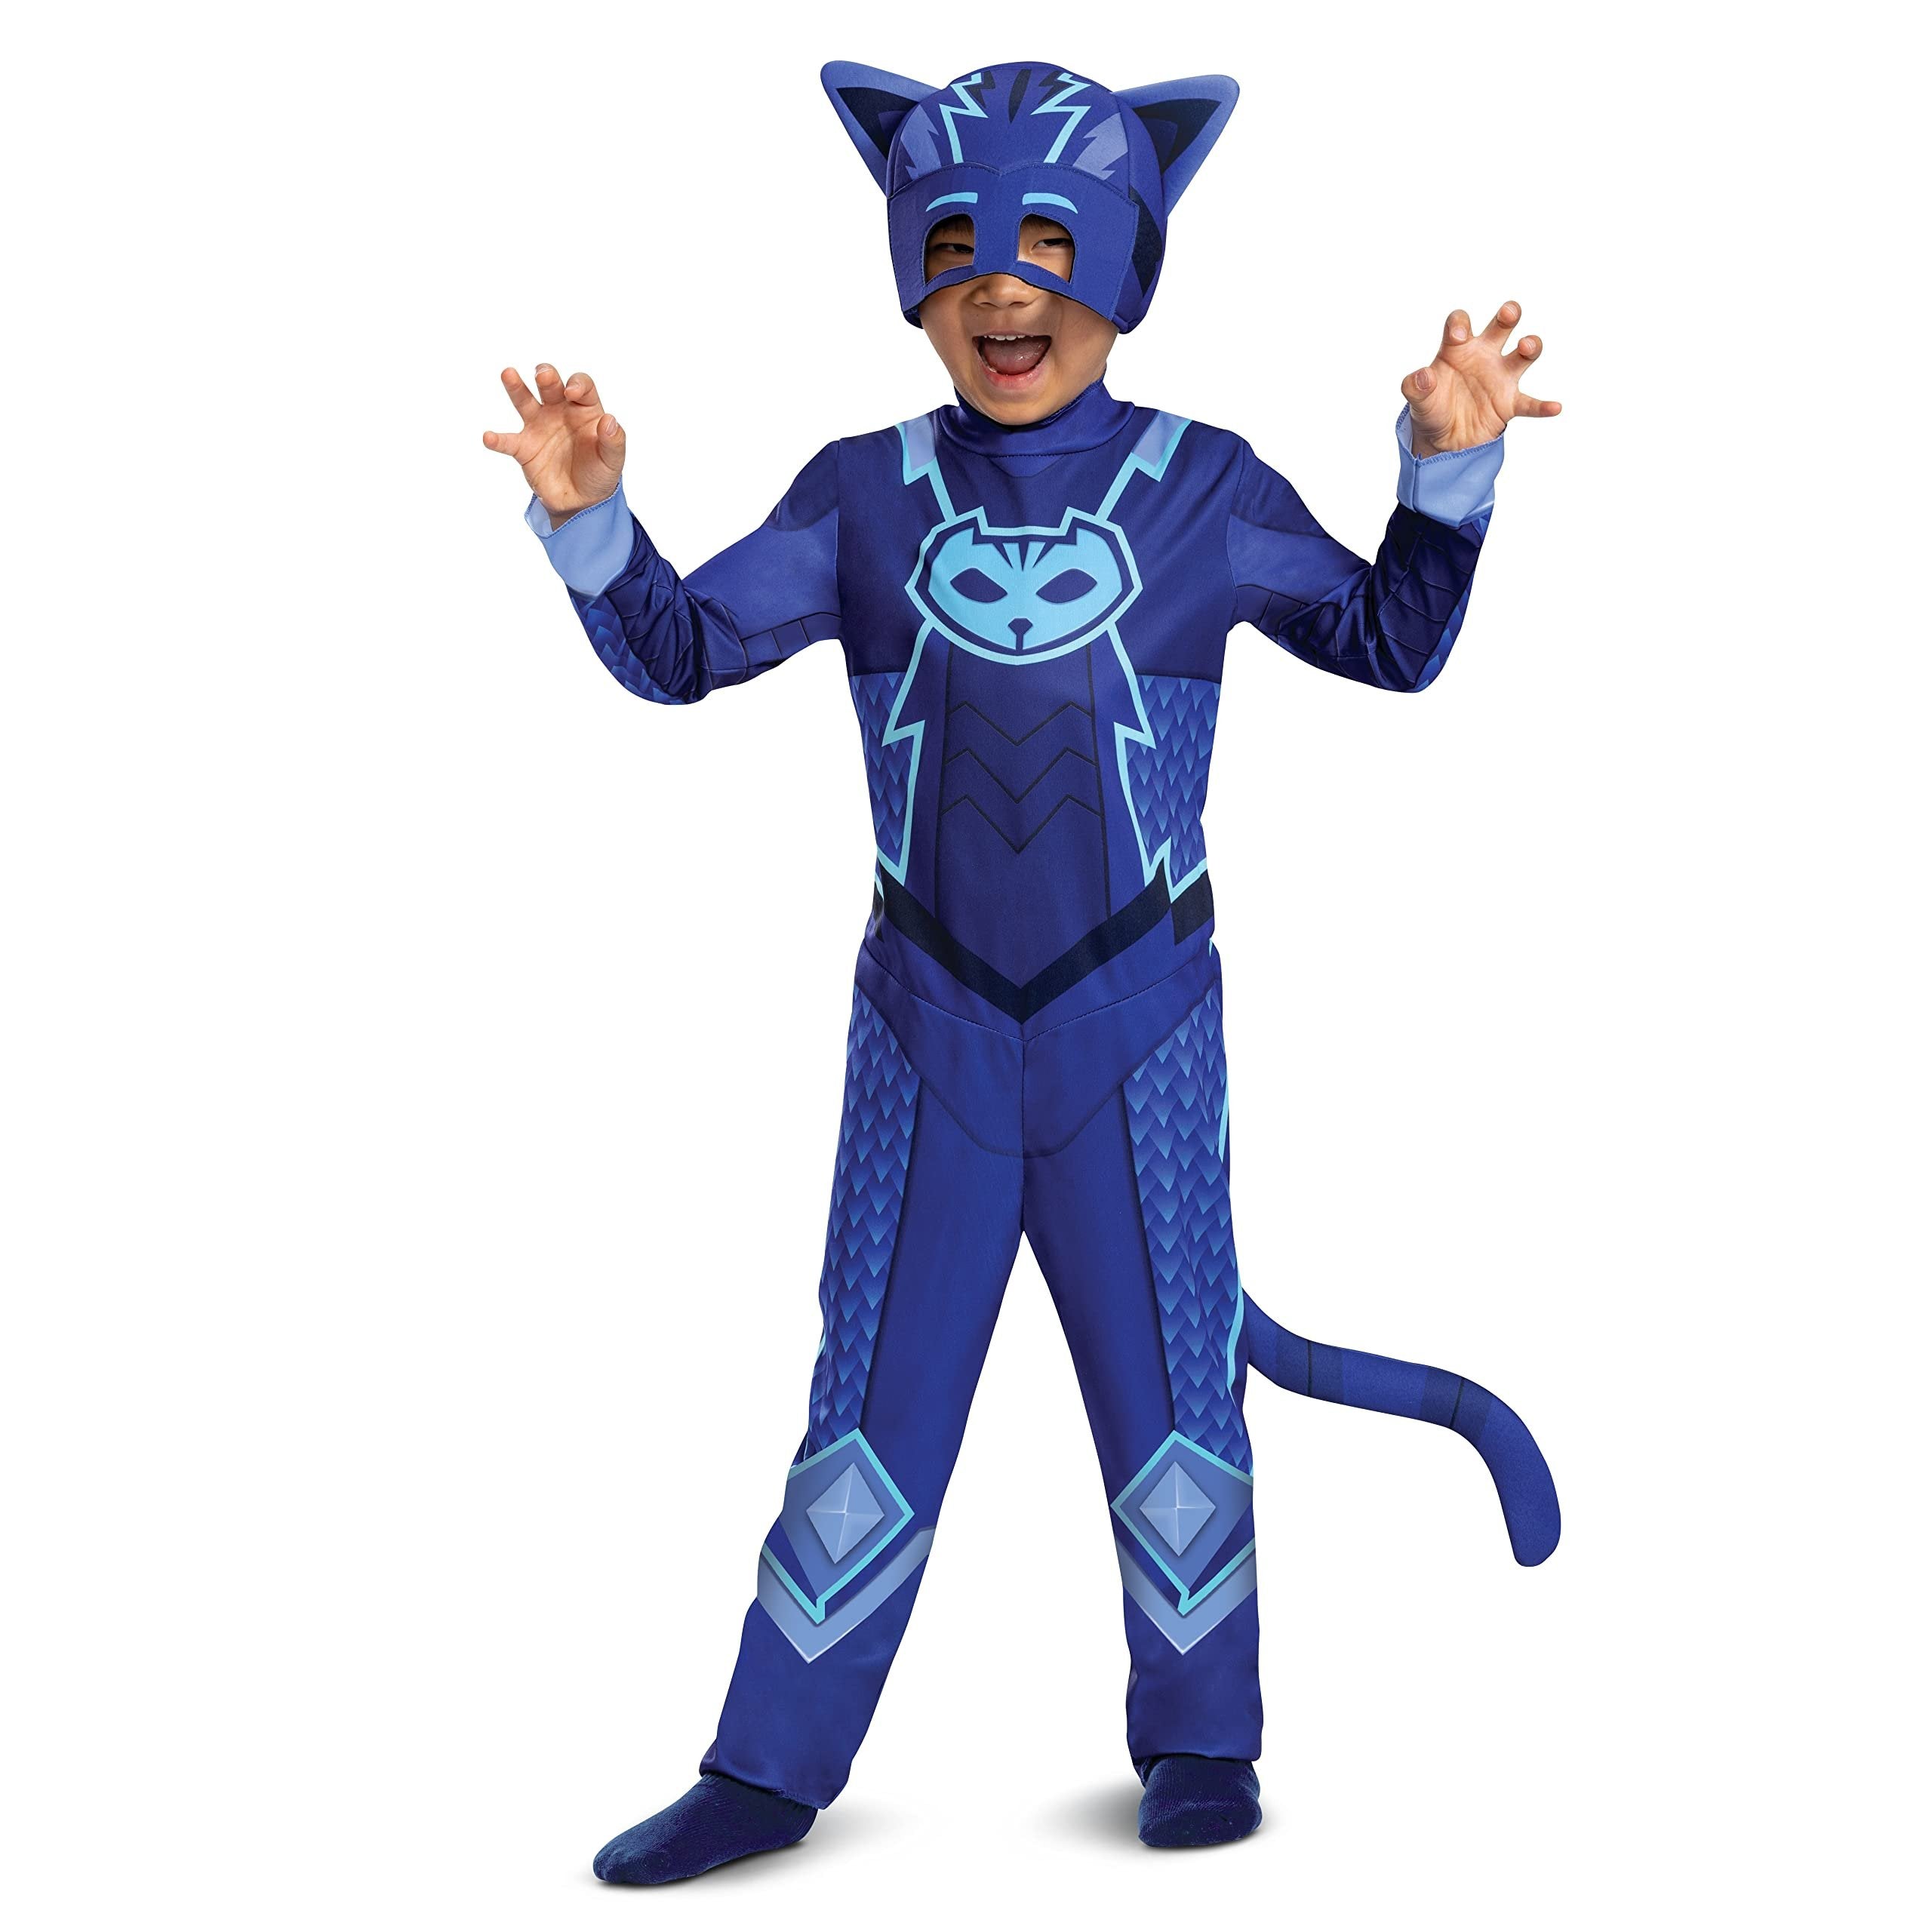 Disguise Catboy Costume Kids PJ Masks Megasuit Jumpsuit Mask Toddler Small 2T As Shown